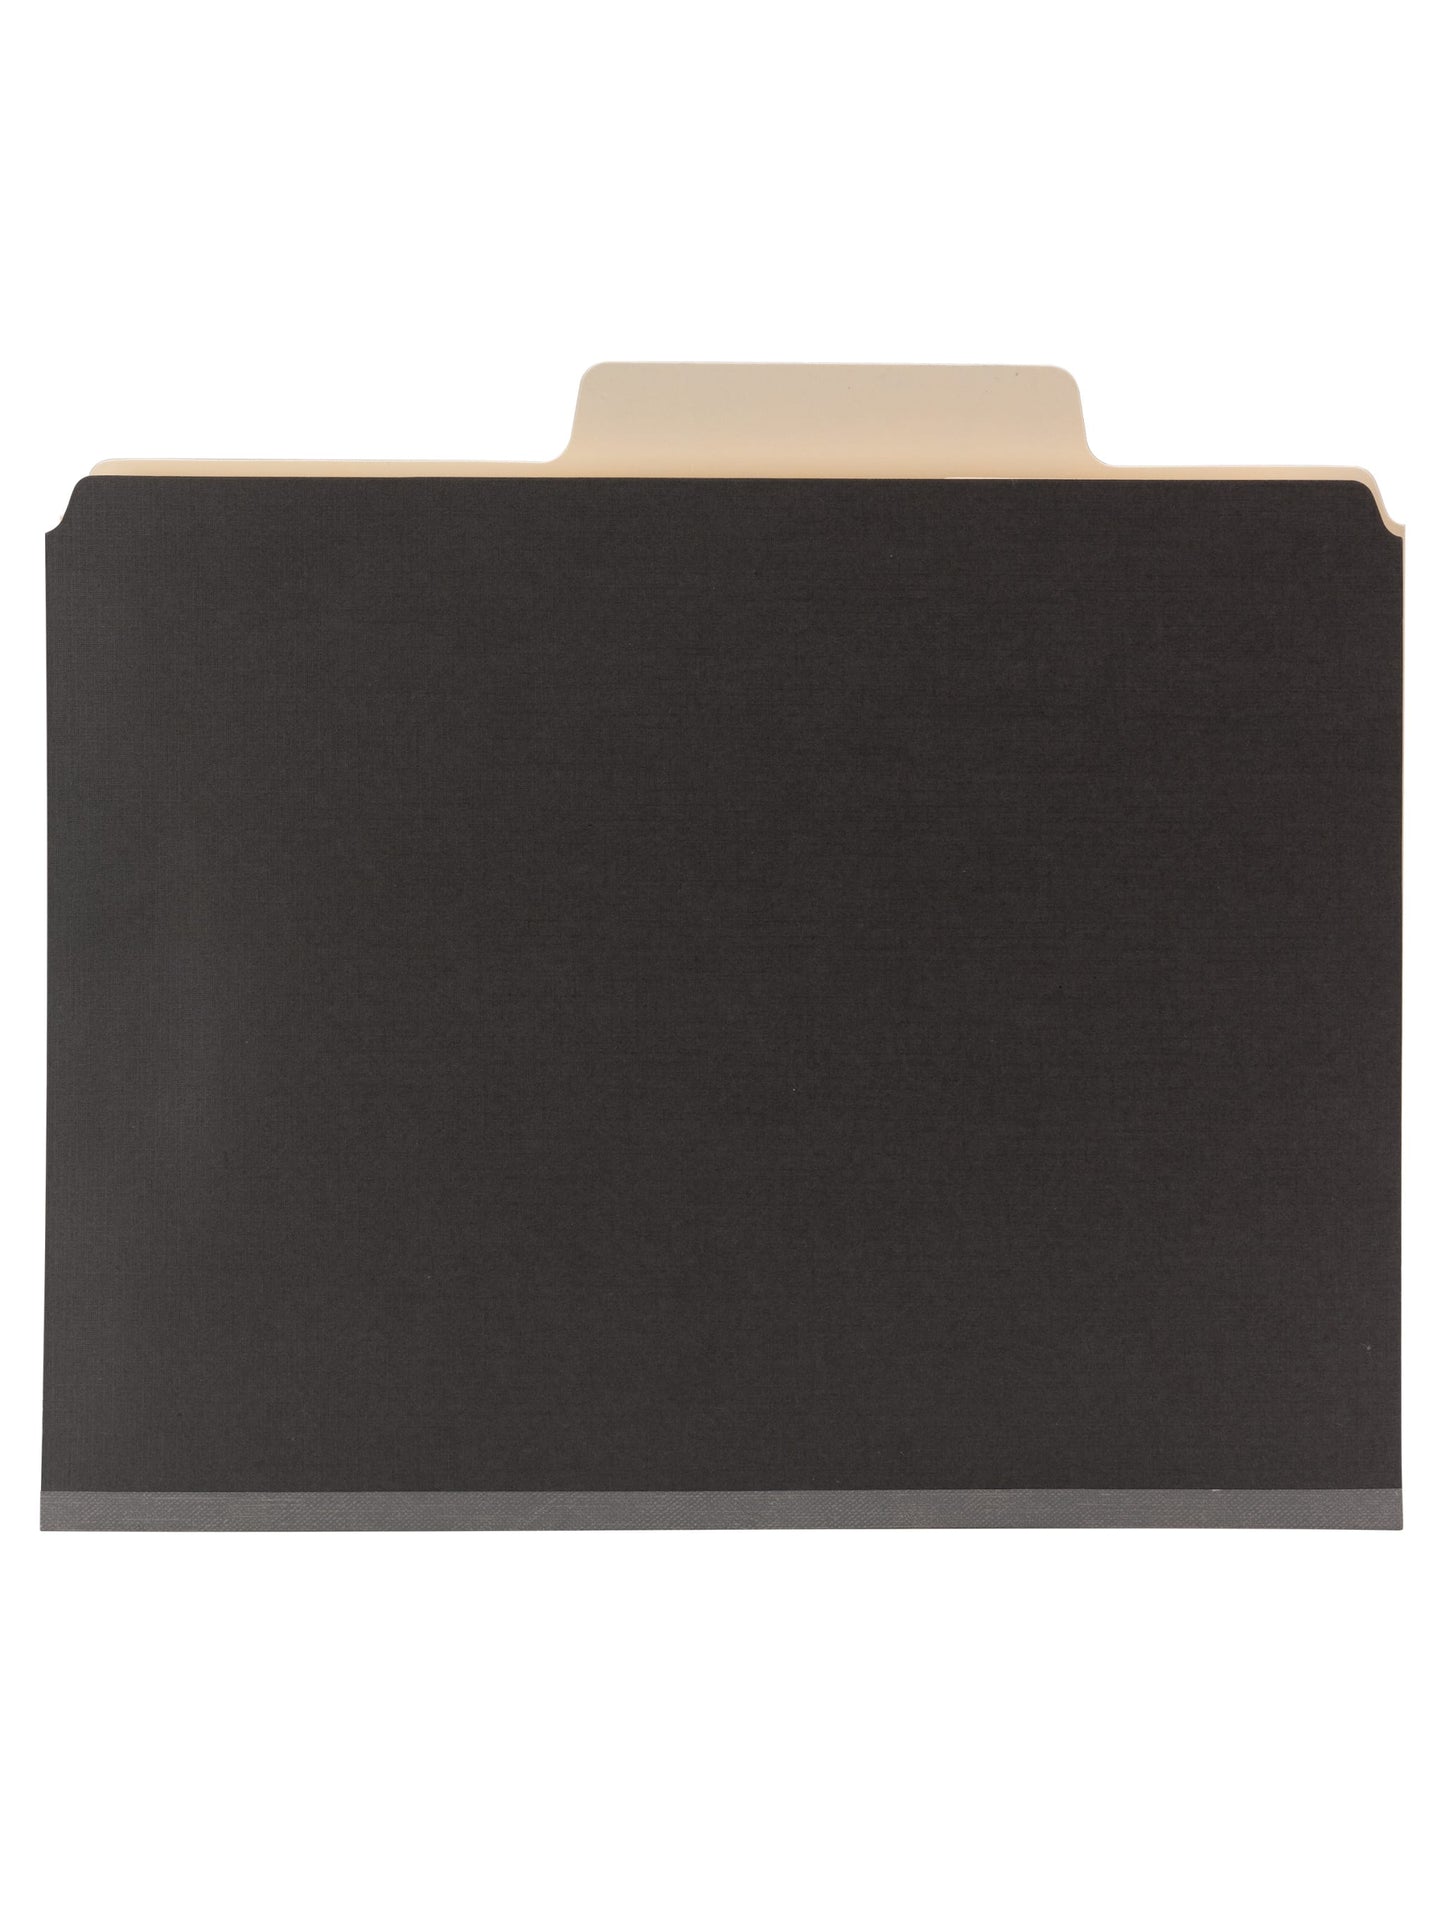 SuperTab® Classification File Folders, Dark Gray Color, Letter Size, Set of 0, 30086486140110